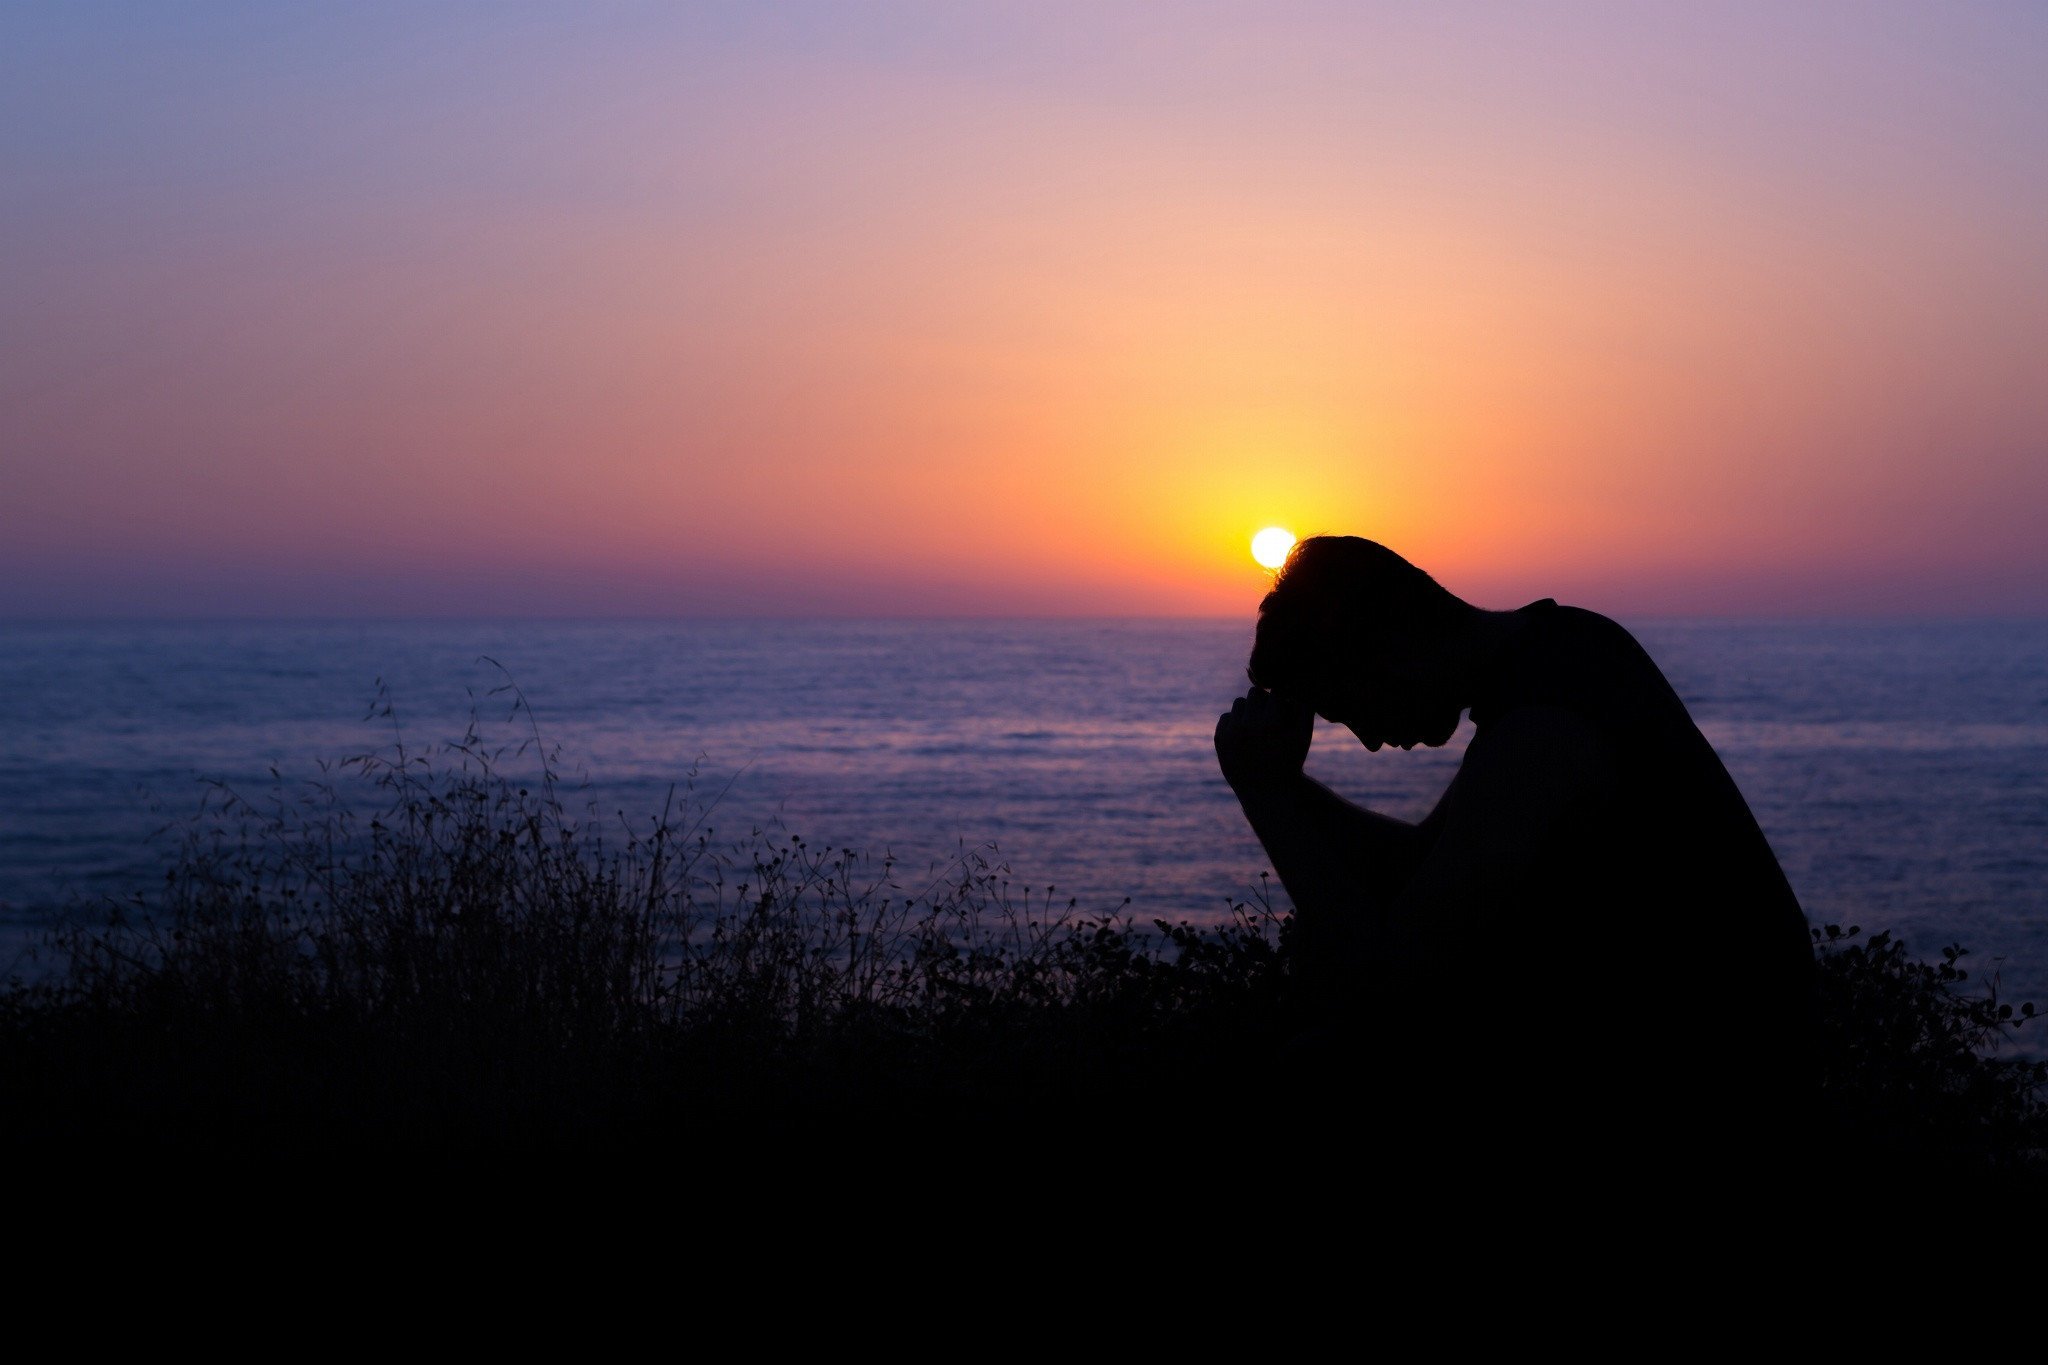 2048x1365 Sad Boy Desktop Backgrounds. Man Praying by the Sea at Sunset